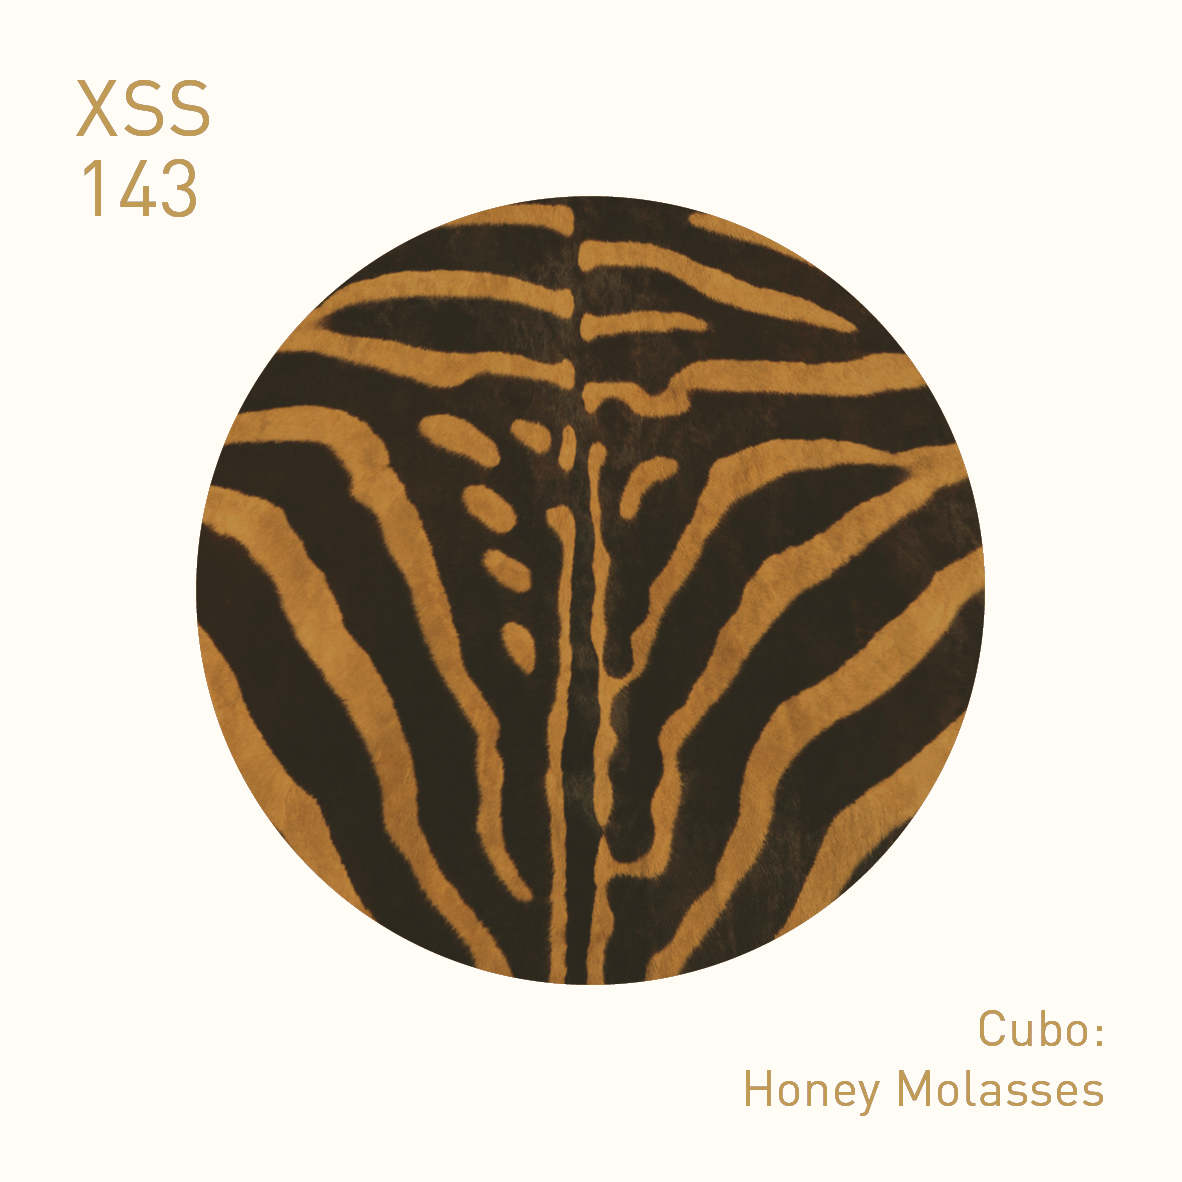 XSS143 | Cubo | Honey Molasses